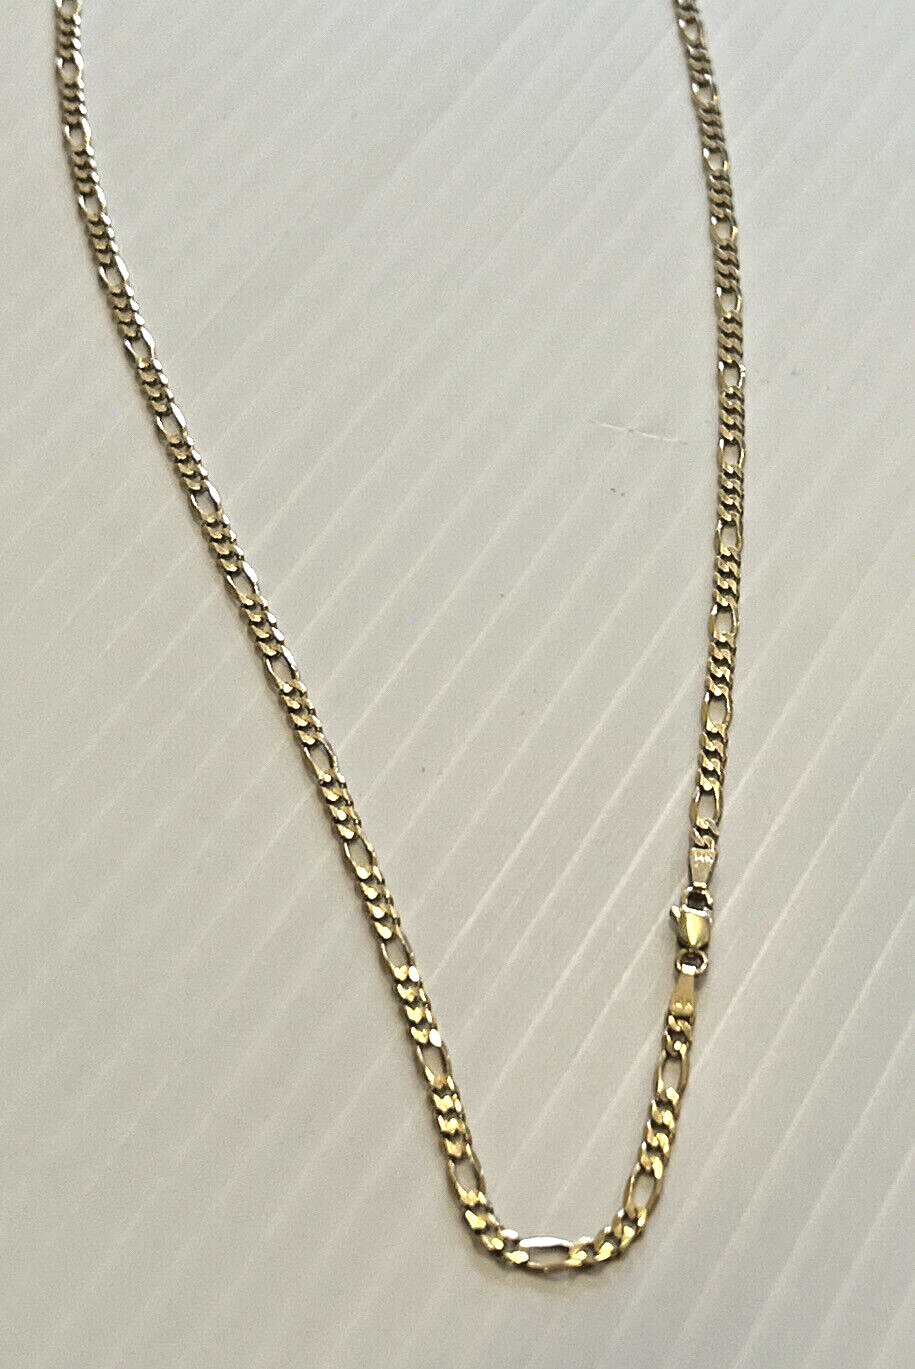 14k 585 Gold Figaro Link Italian Chain 24" Inch, 8.7 grams, 3.3mm